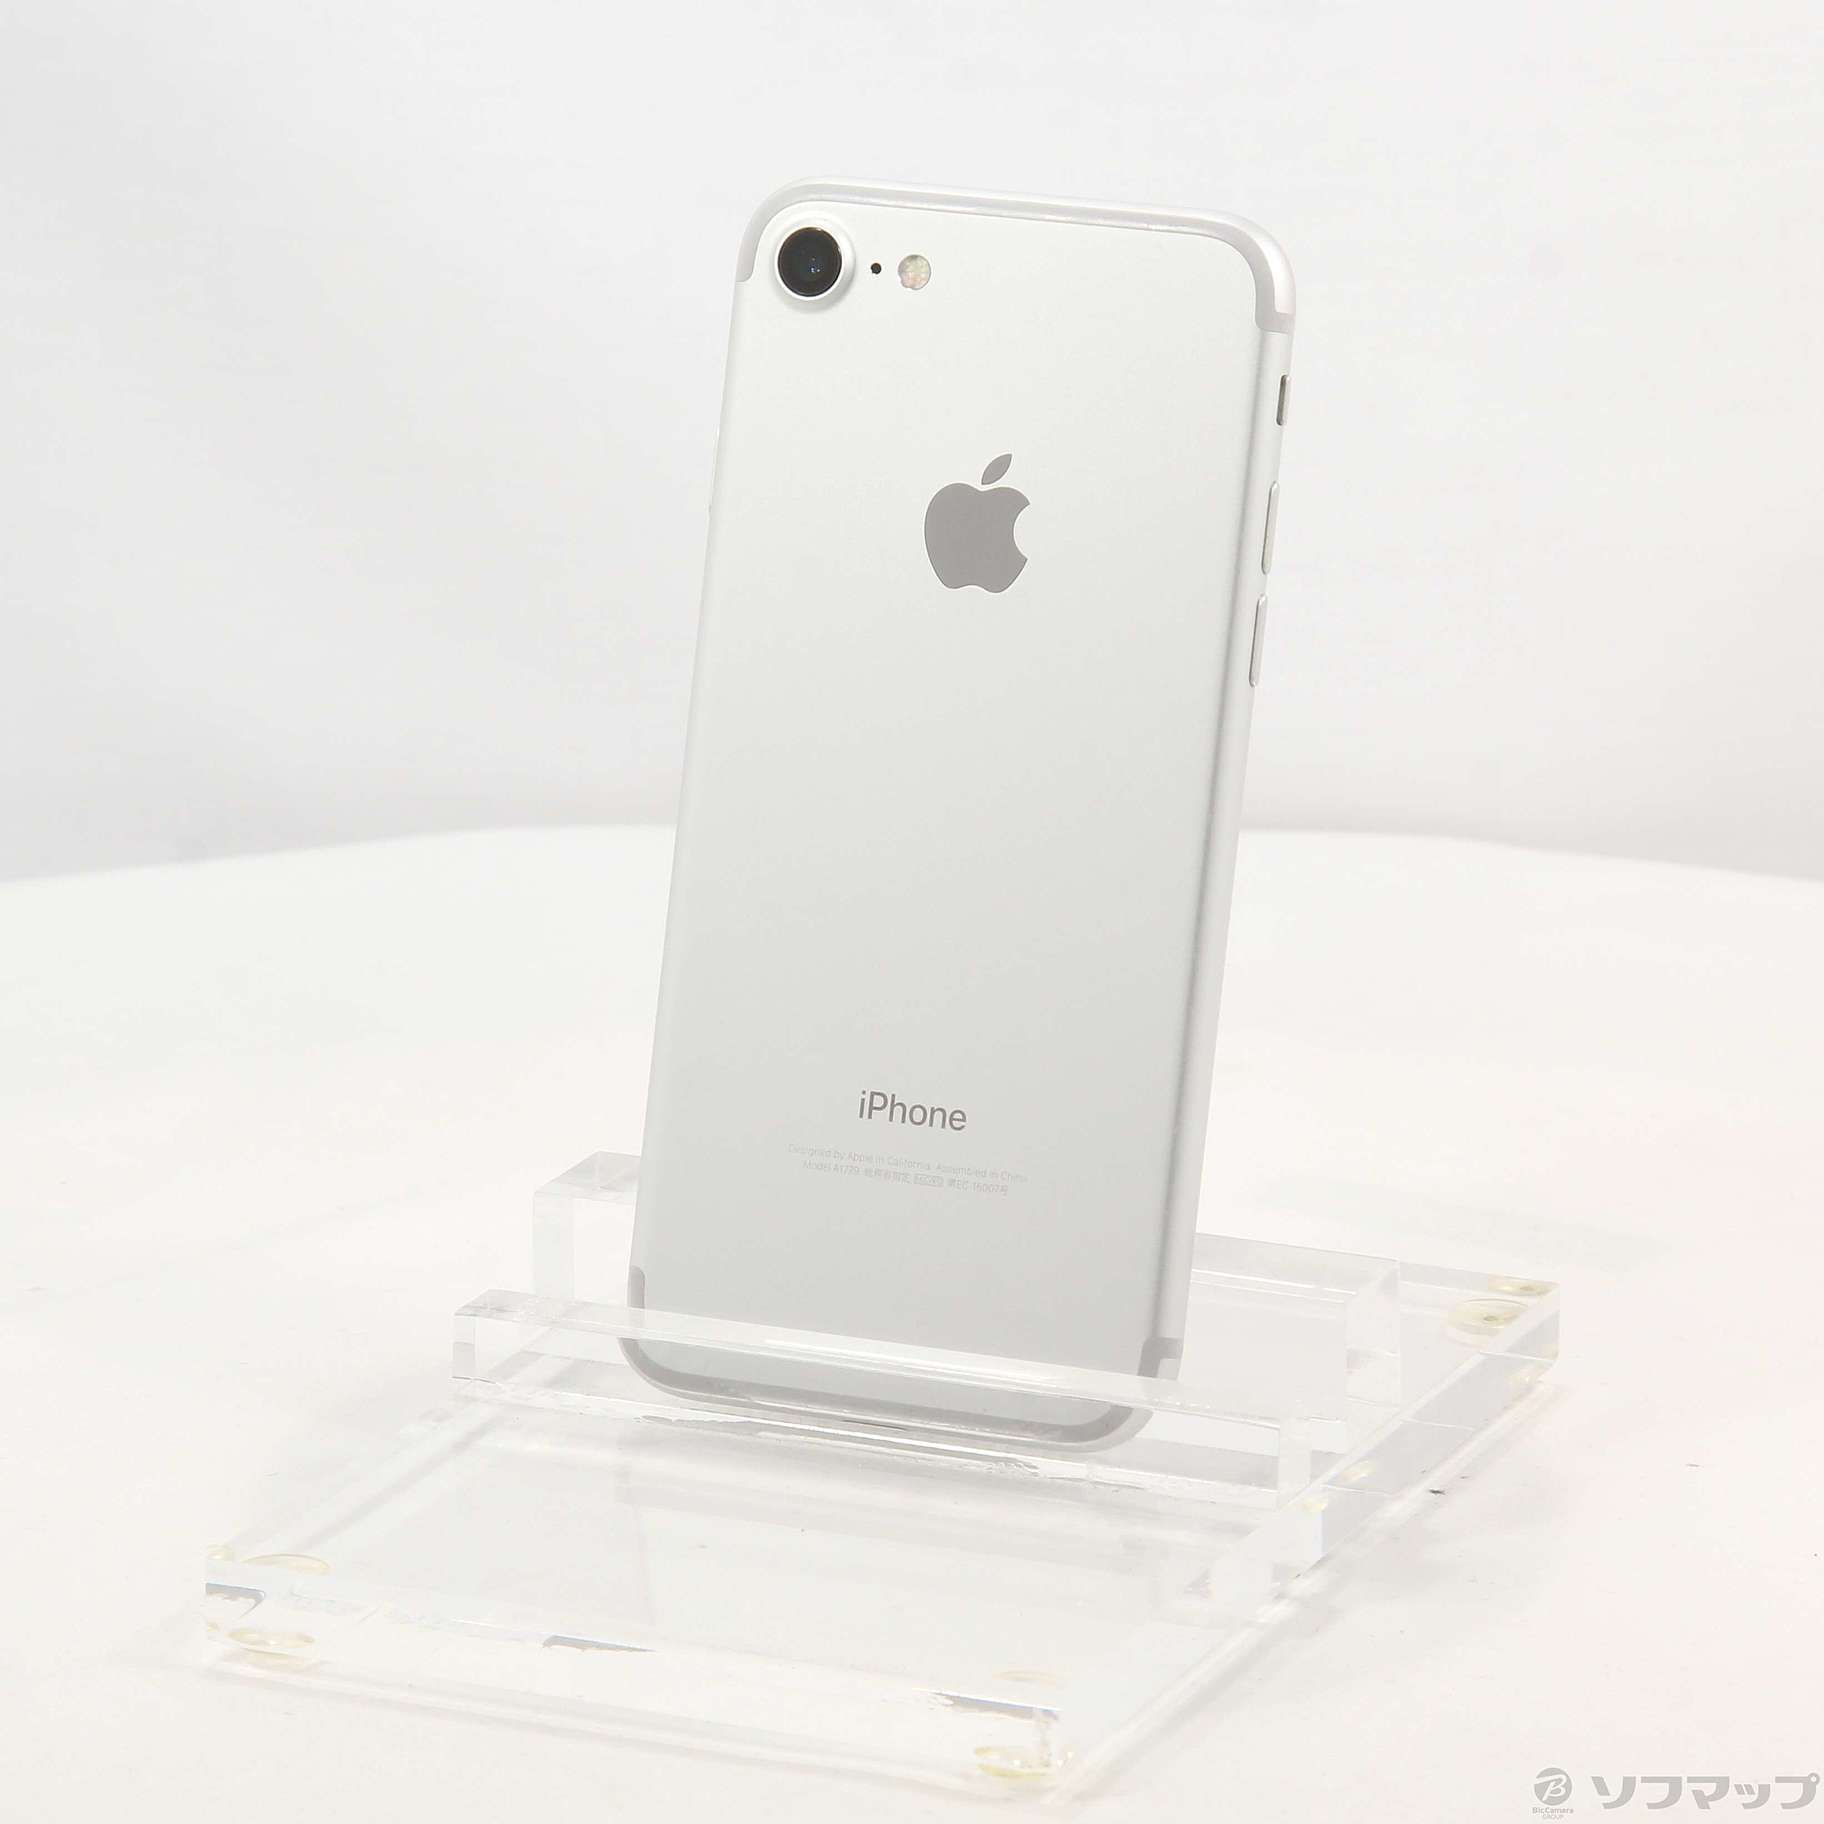 iPhone7 Silver 128GB Sim free Apple